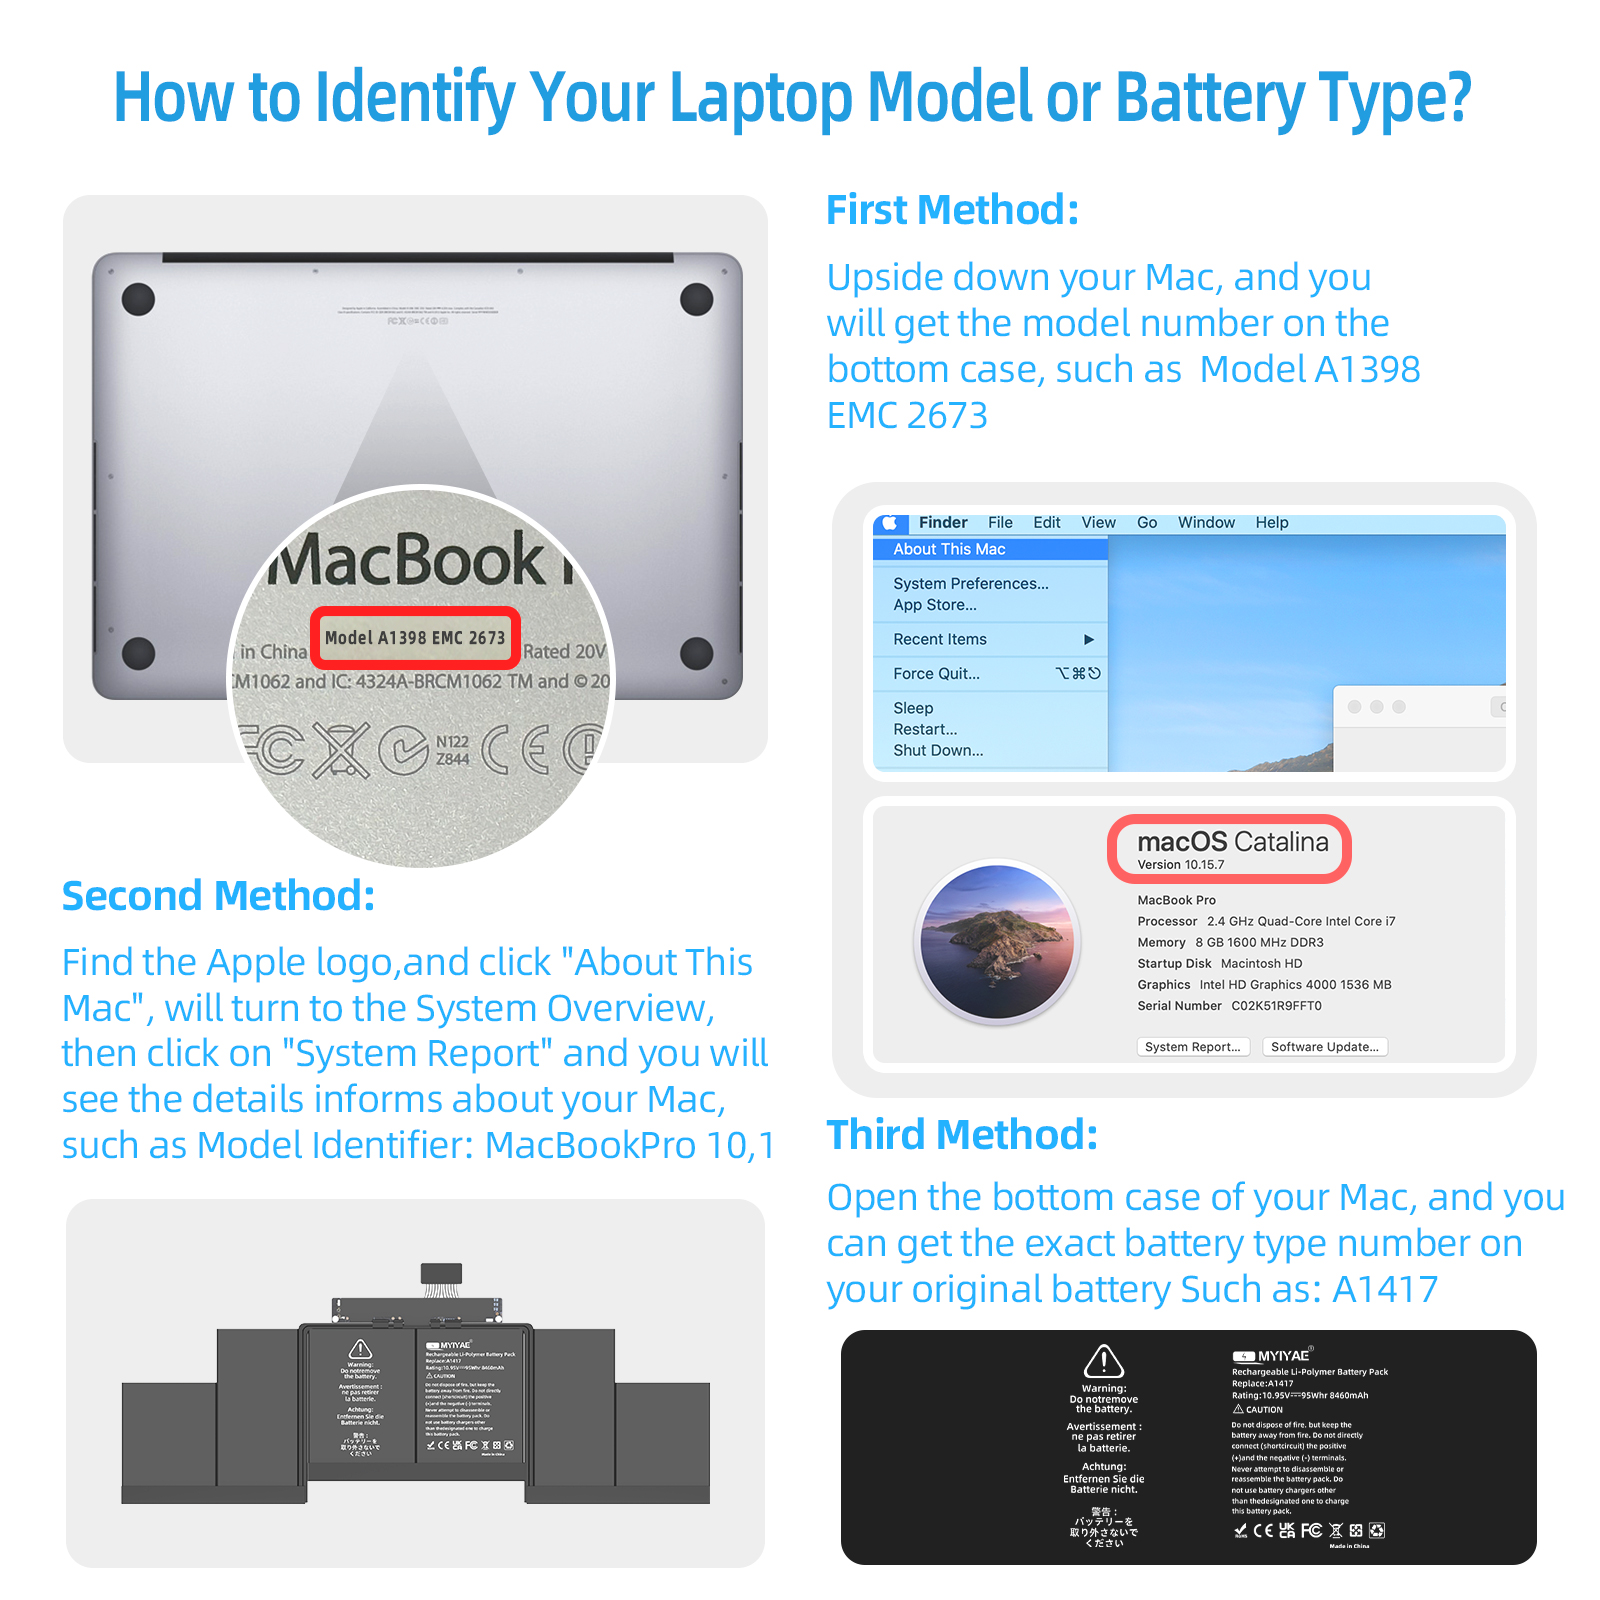 A1417 Battery for MacBook Pro 15 Inch Model A1398 EMC 2512 2673